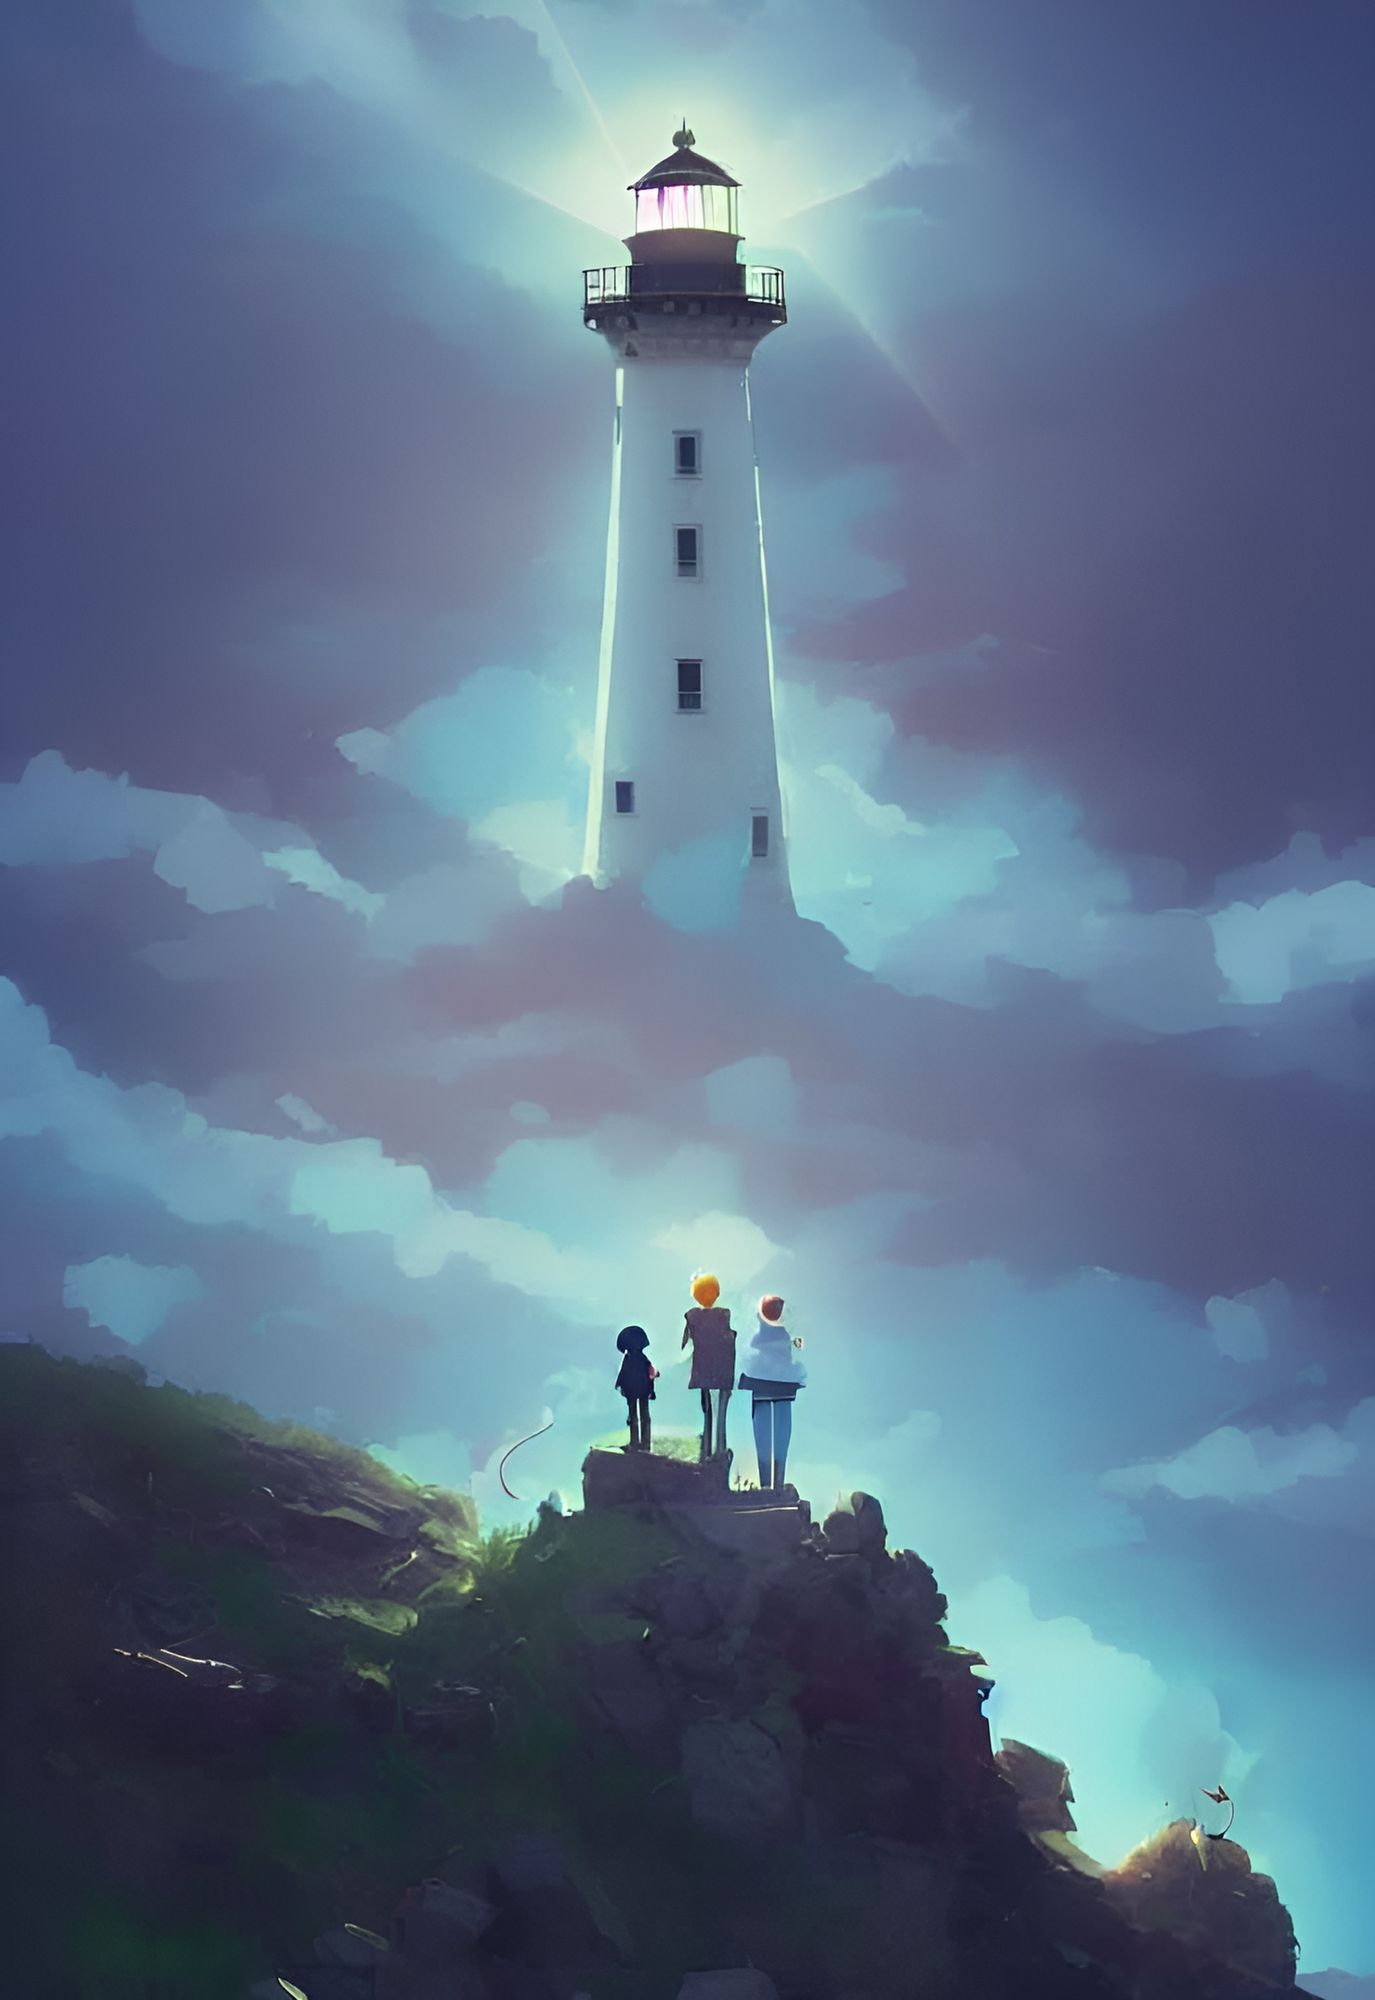 Pin by Gurutze Ramos on FAROS | Anime scenery, Scenery, Lighthouse